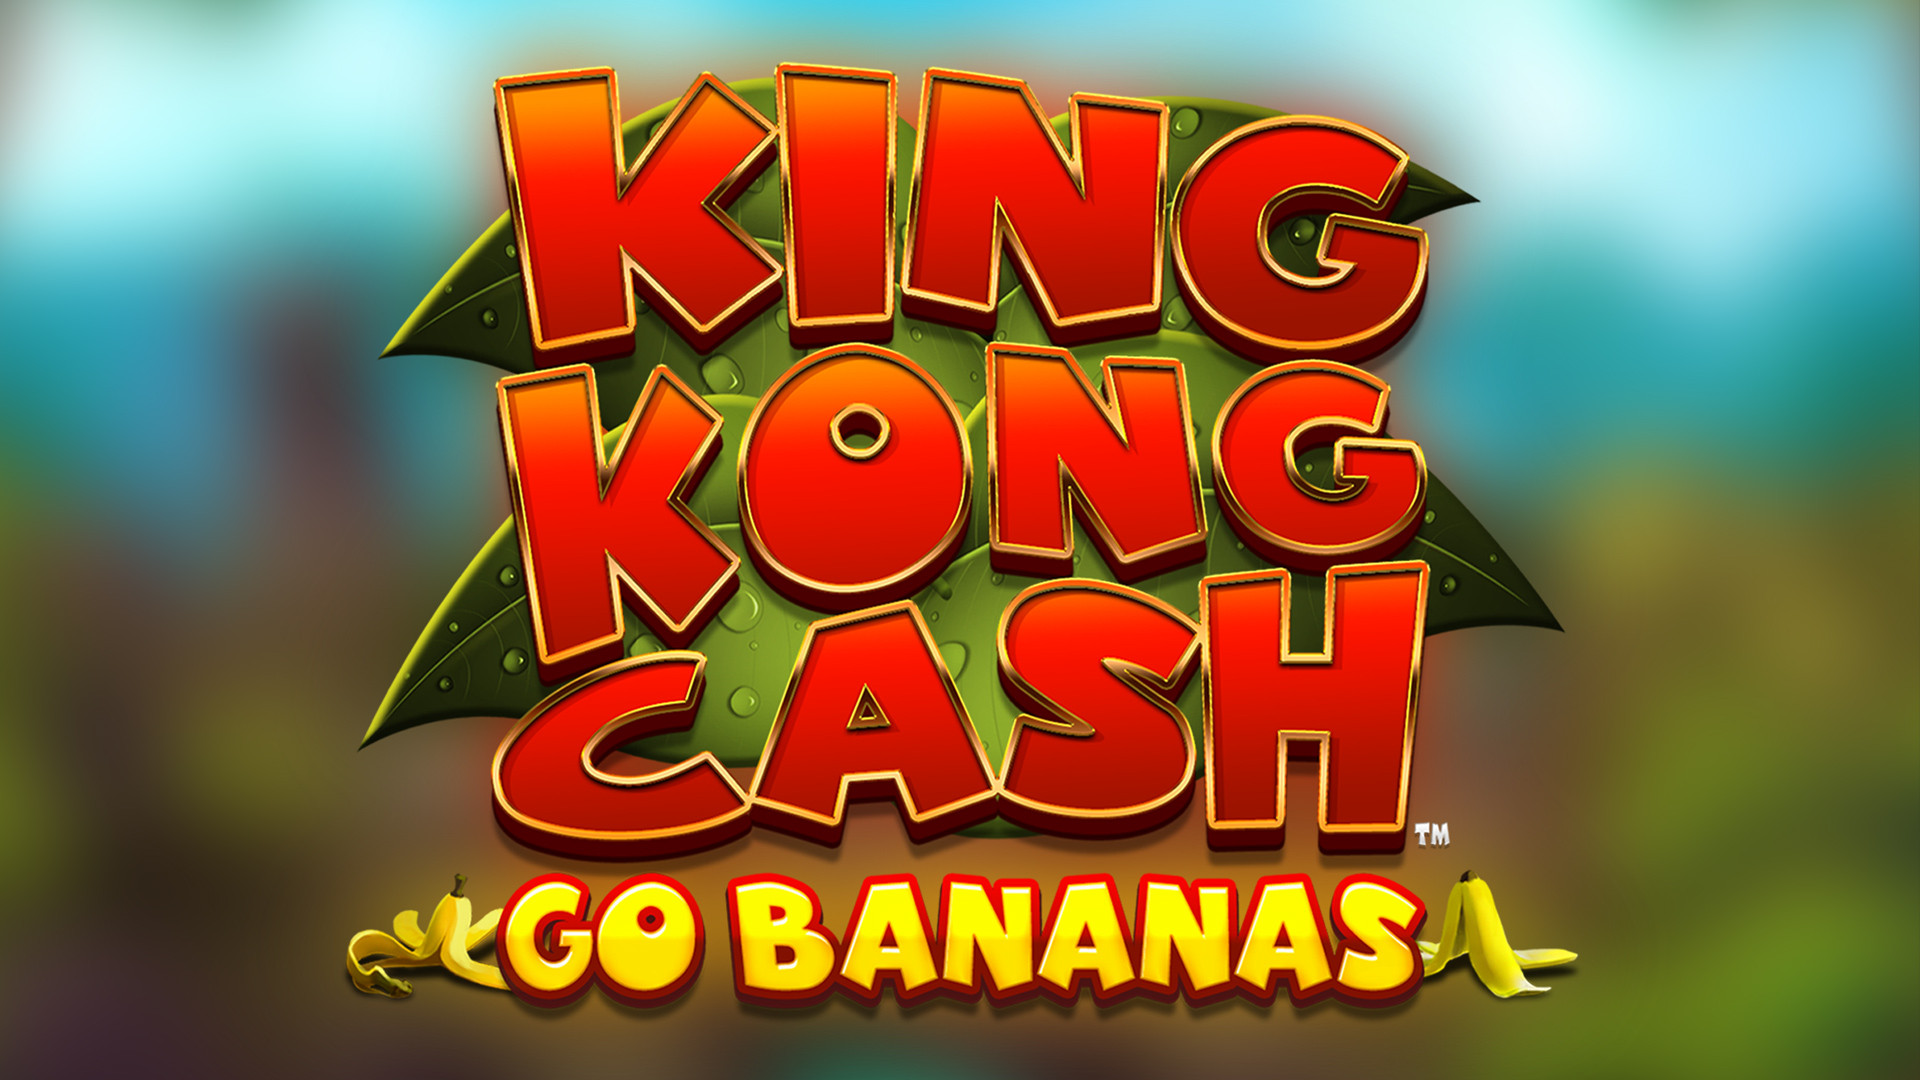 King Kong Cash Go Bananas Jackpot King